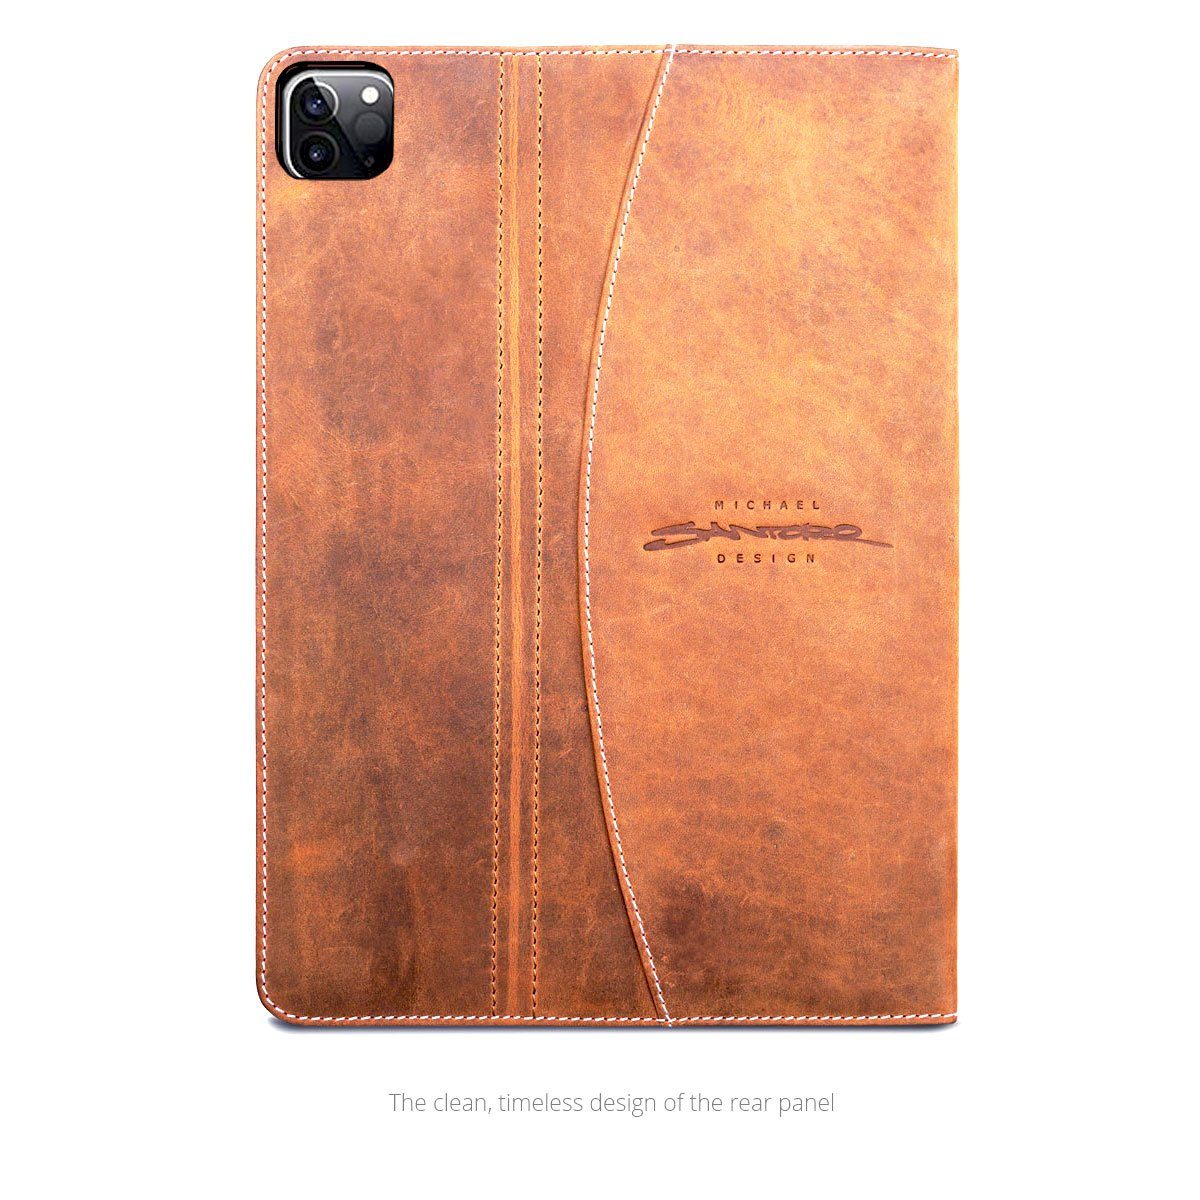 MacCase Premium Leather Gen 5 iPad Pro 12.9 Folio Case - Vintage